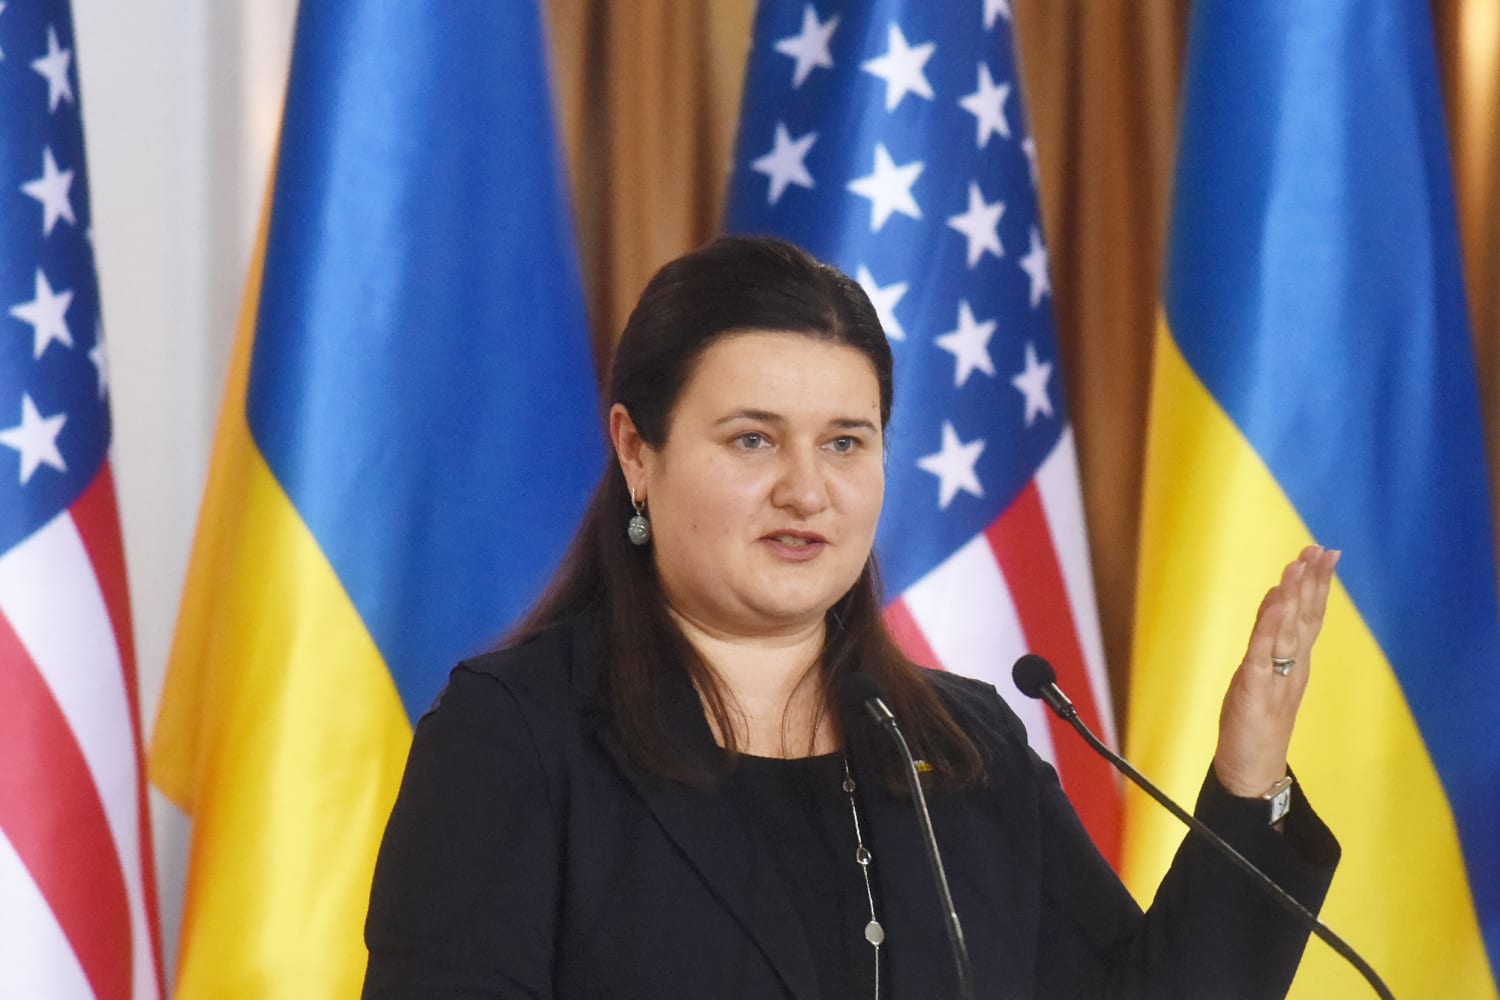 Ukraine ambassador drops by McCarthy’s office as Republicans split on aid